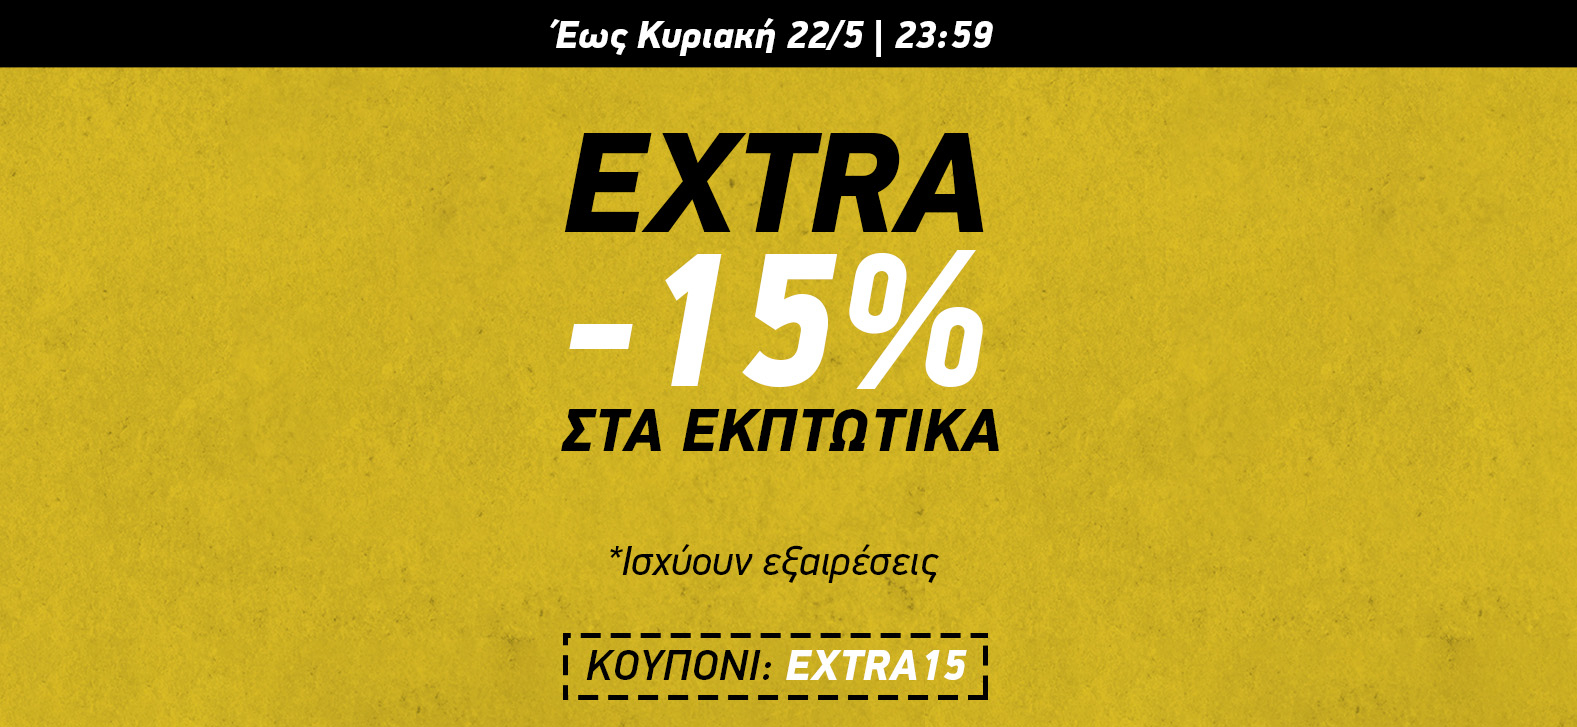 Extra -15%